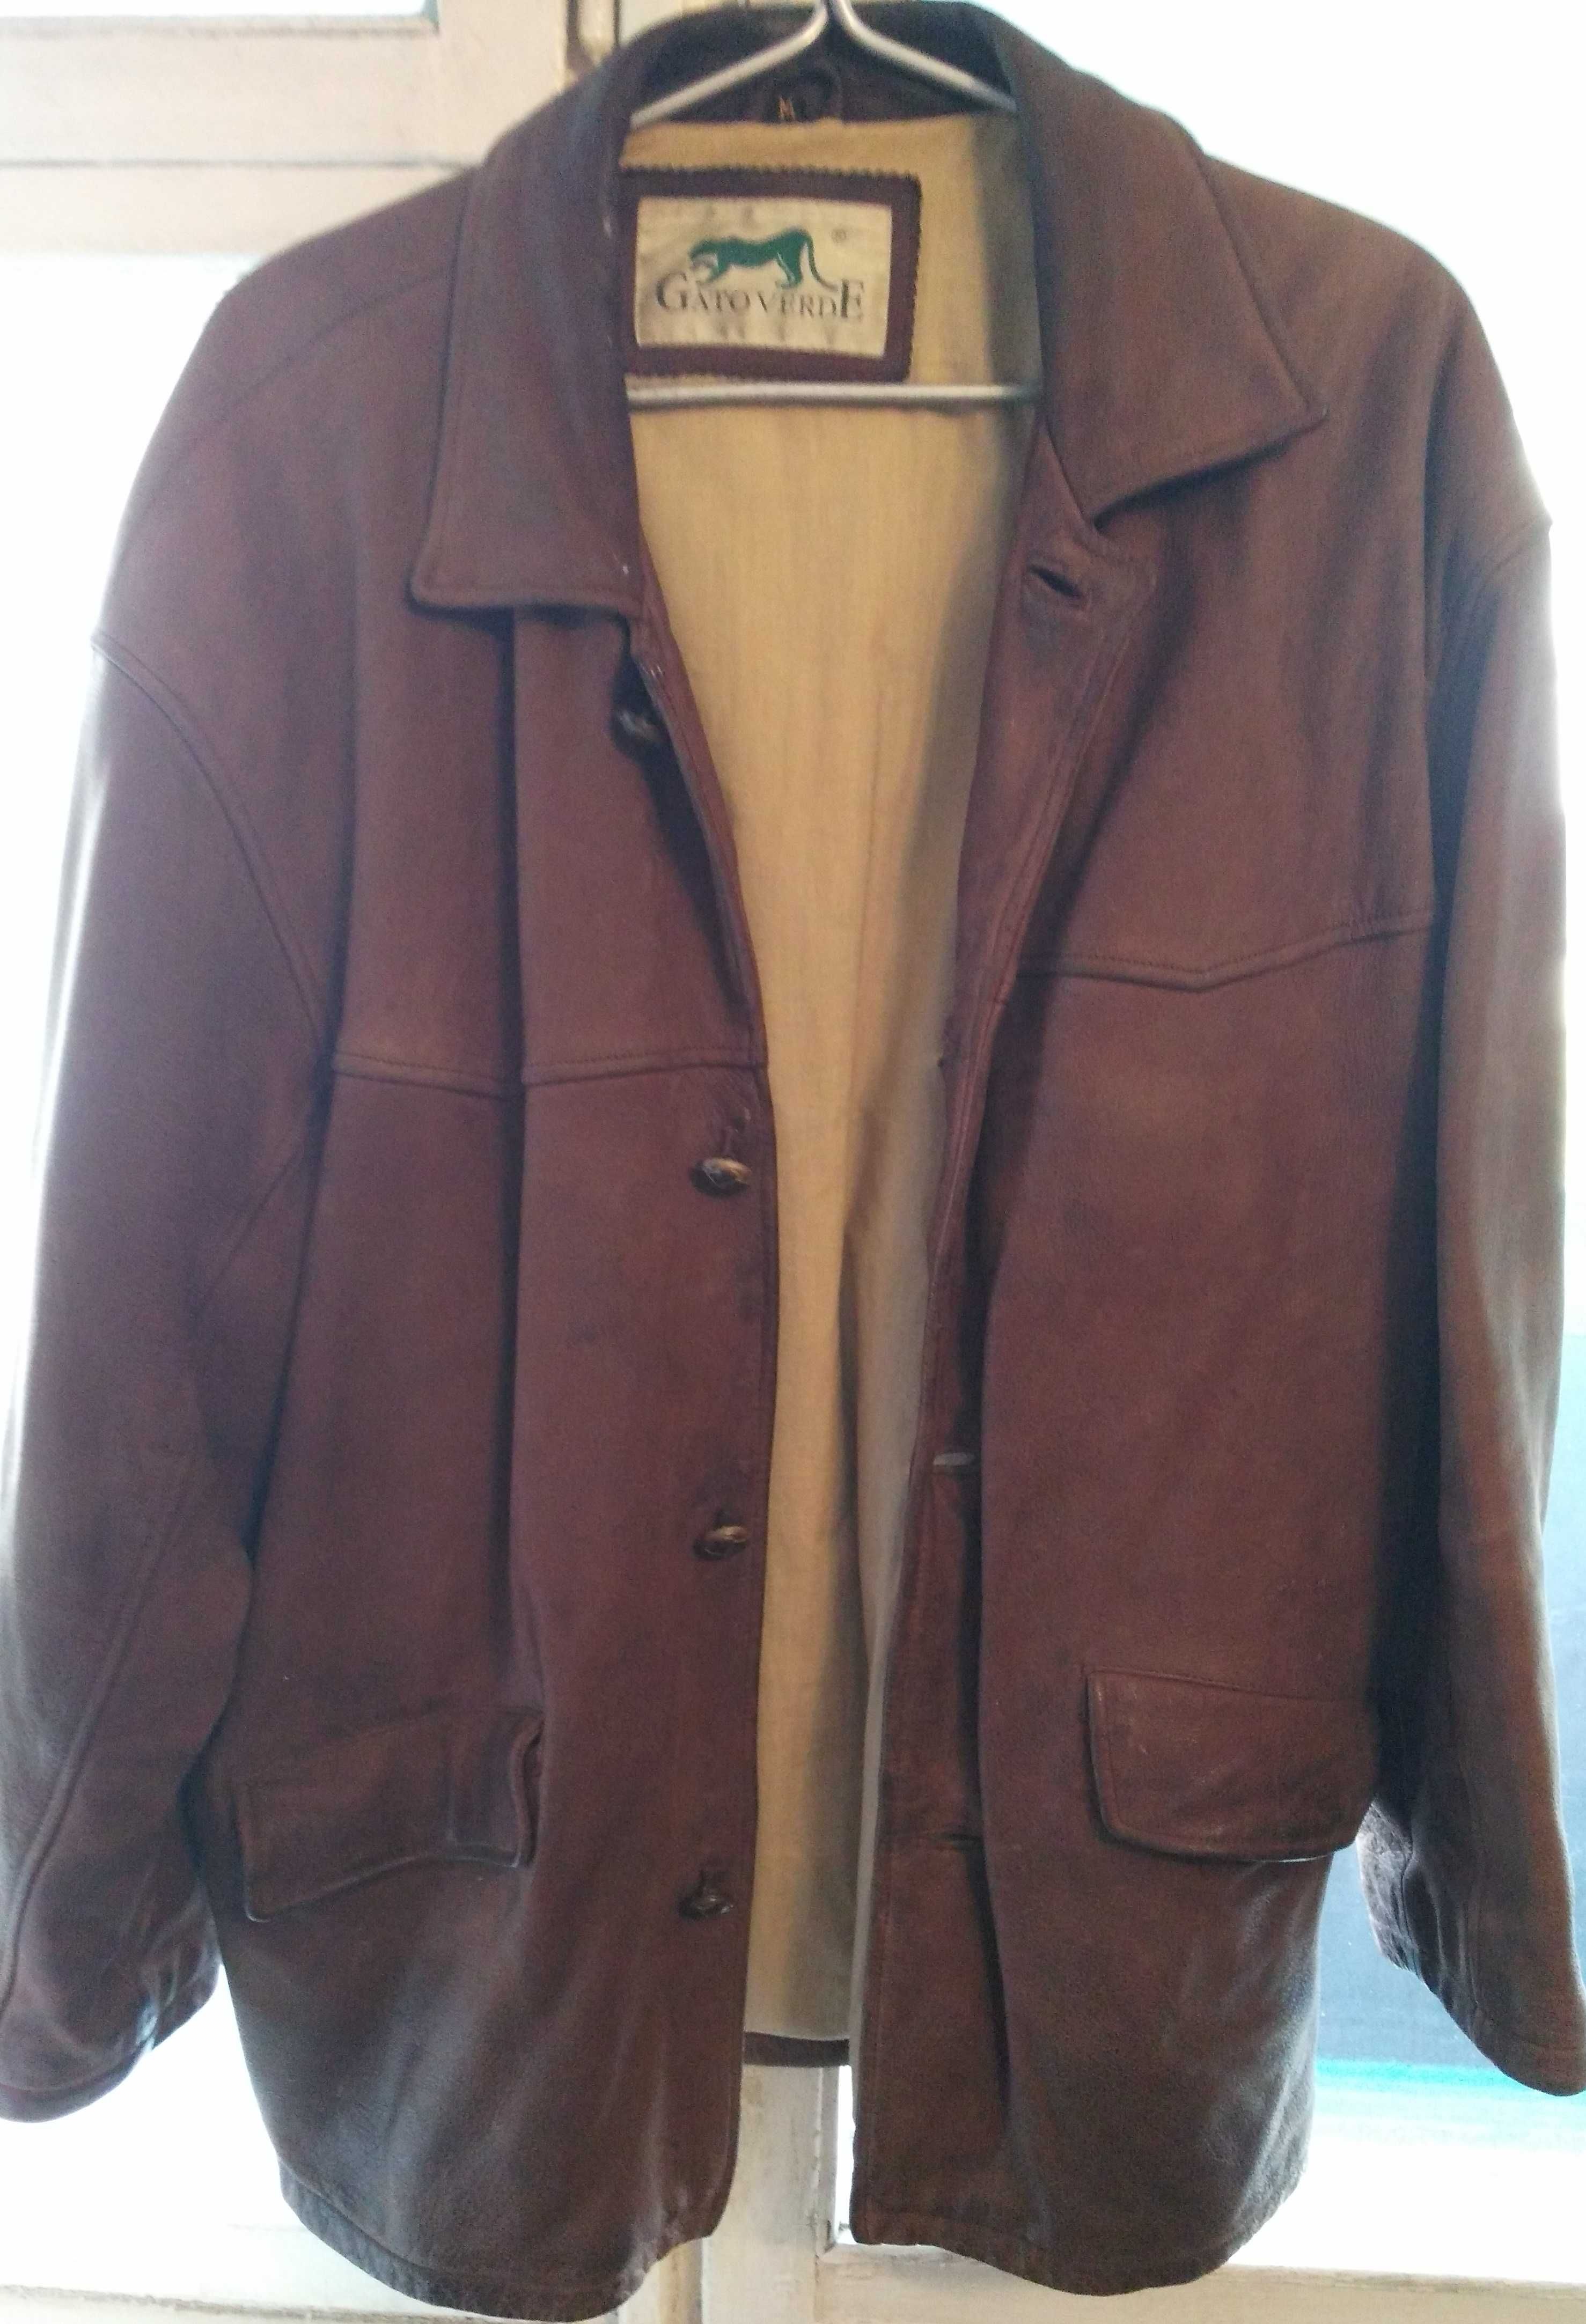 Куртка муж. Gato Verde (Italy) р. 48-50 натур. кожа защ. дождь и ветер